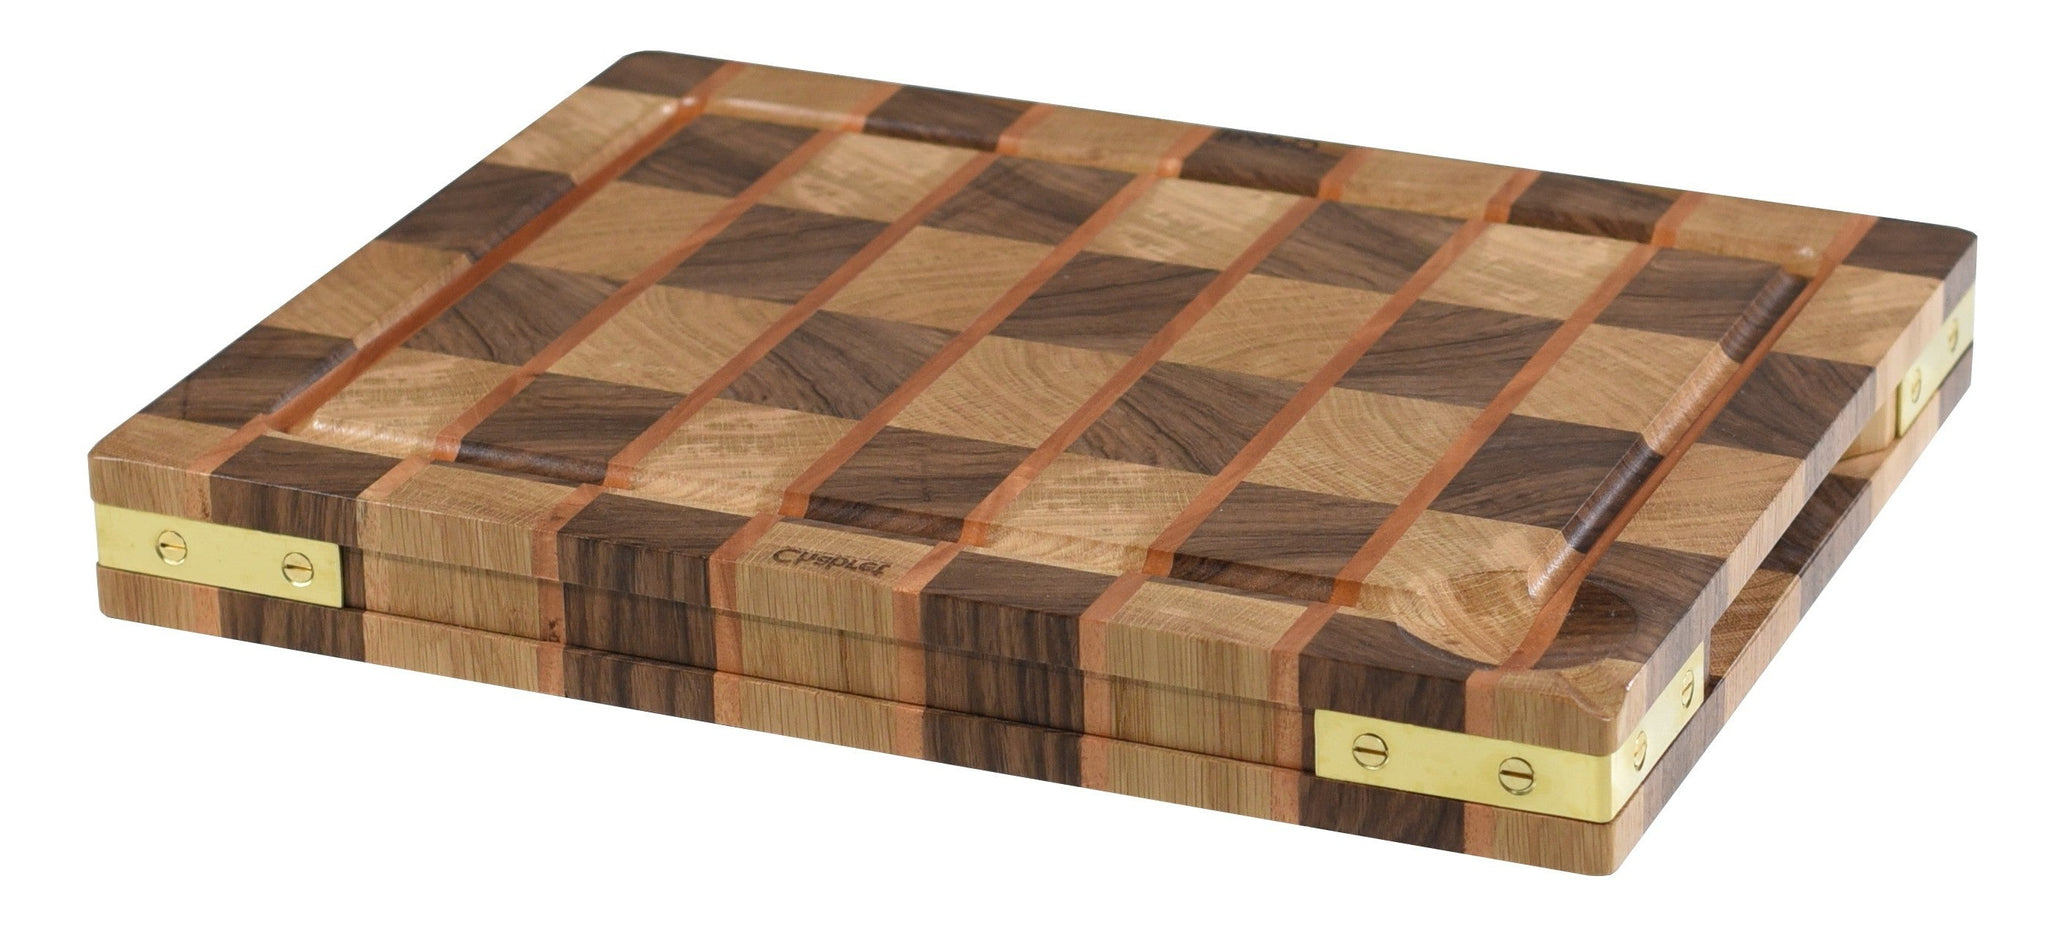 Walnut and oak board with cherry wood strip